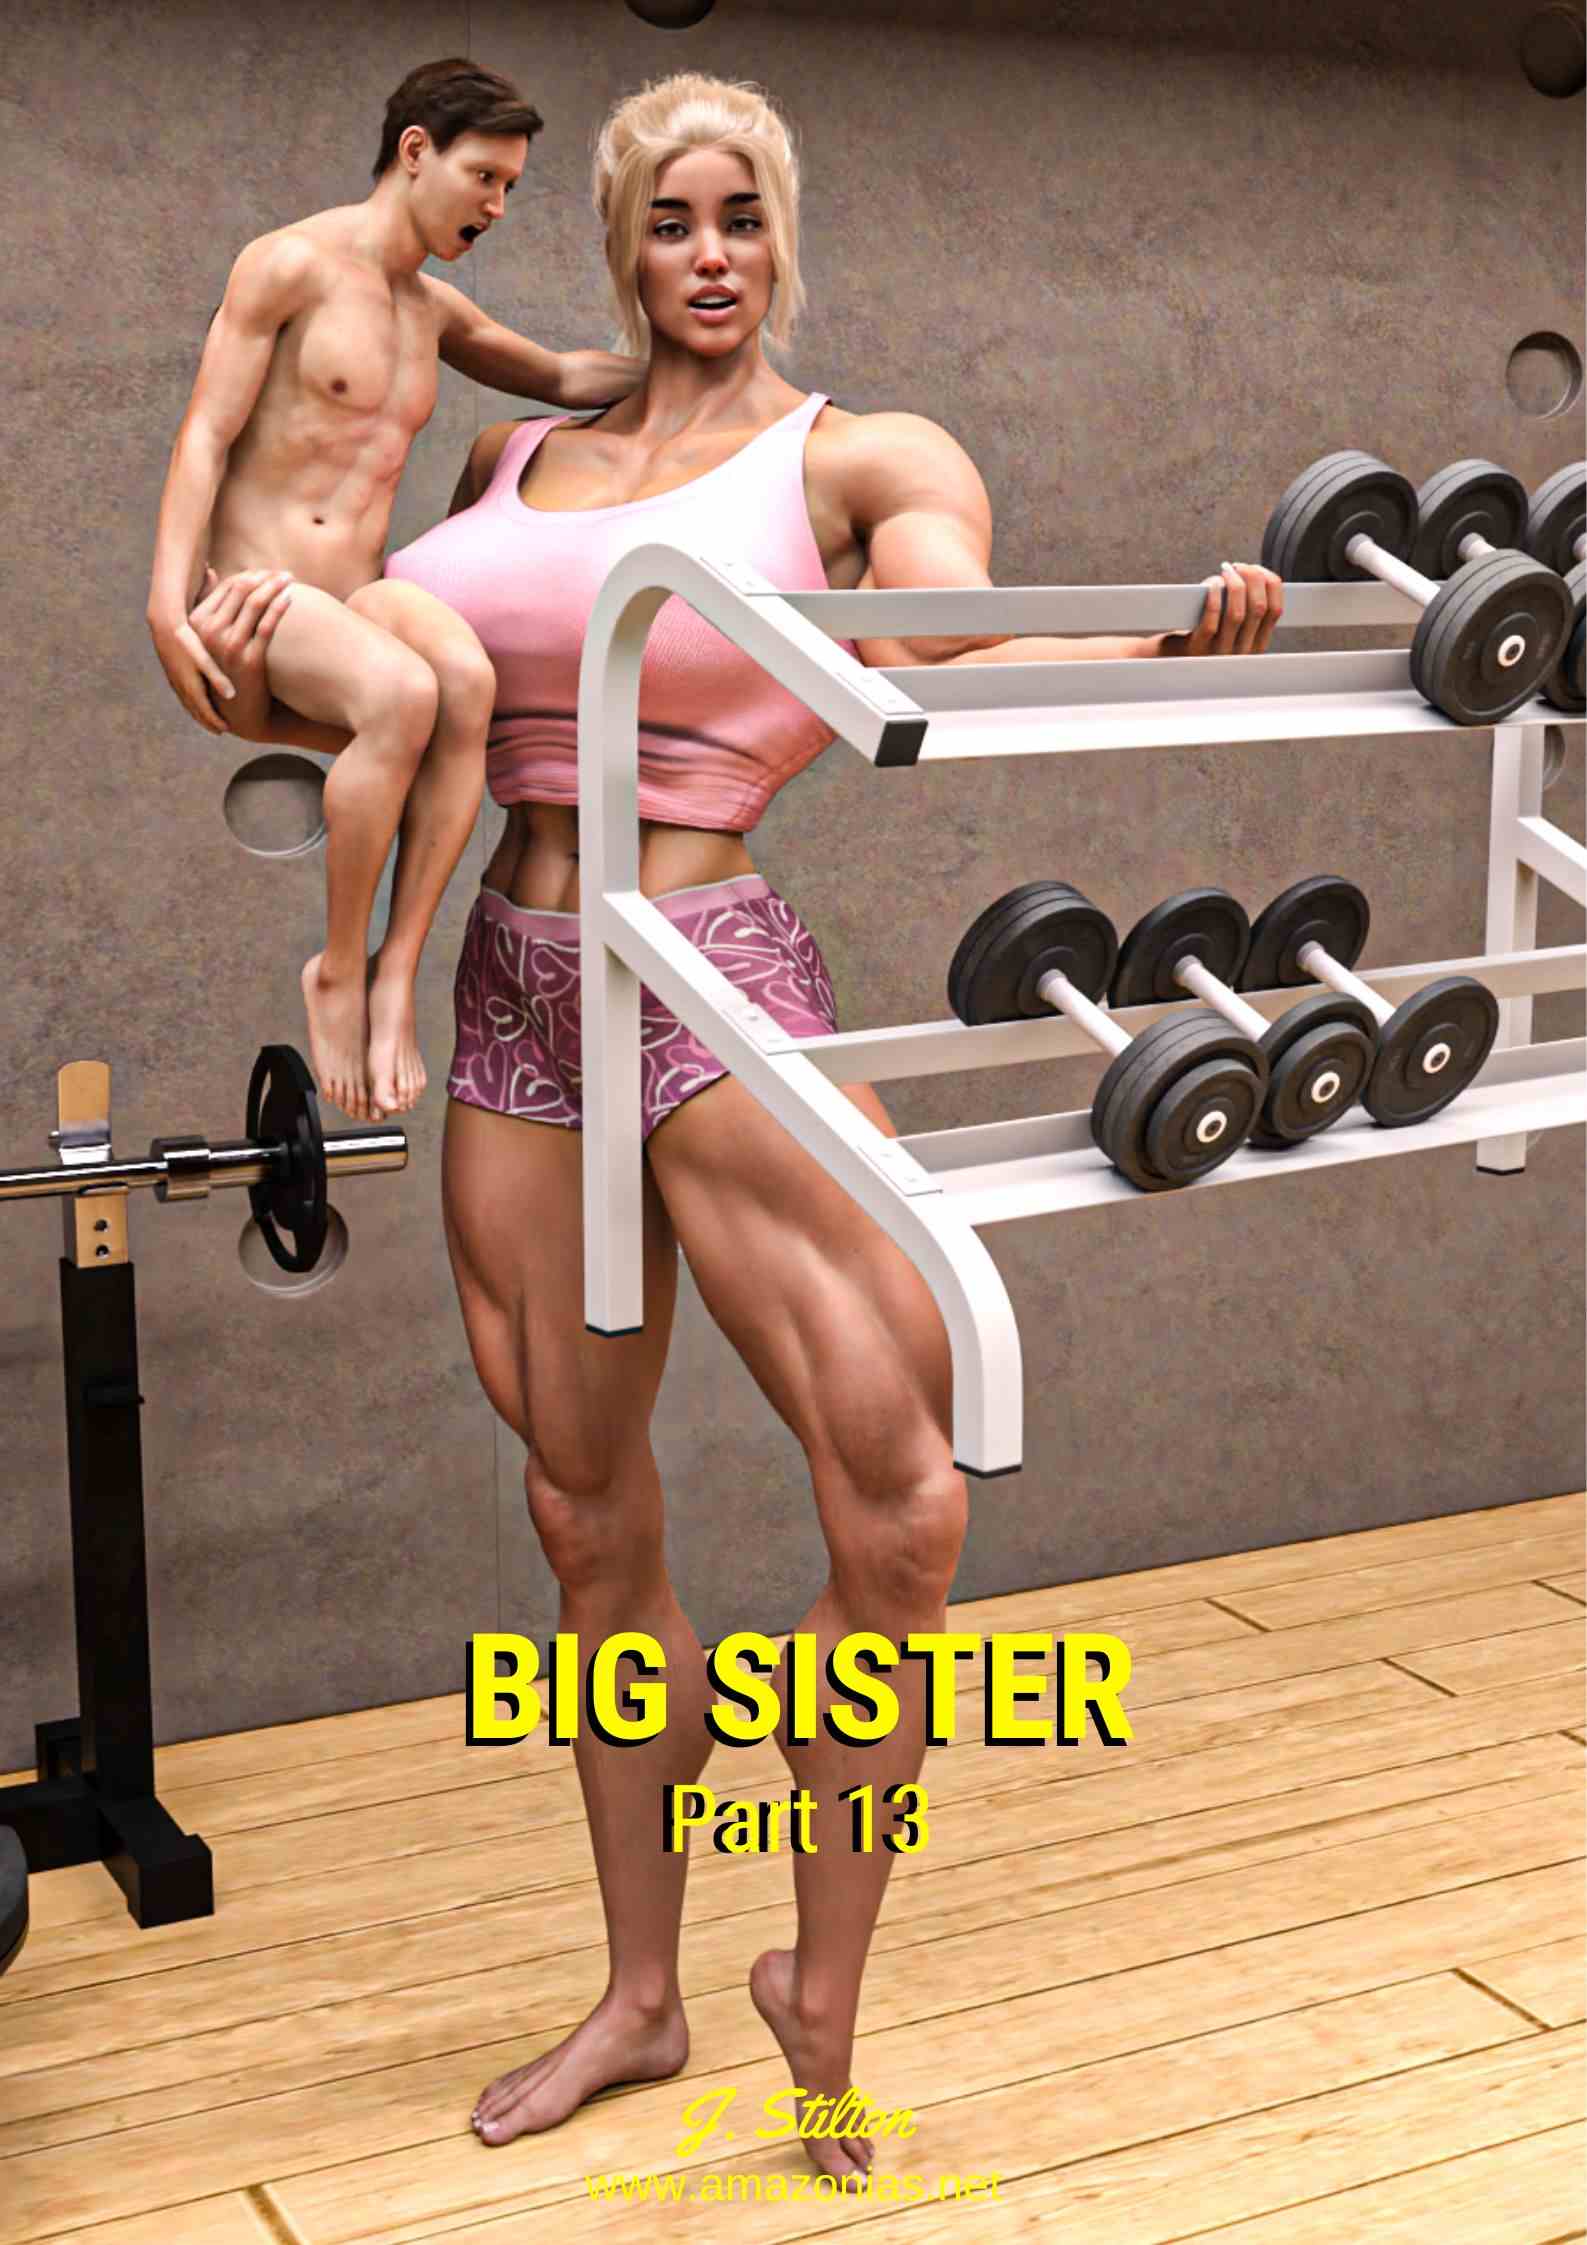 huge female bodybuilder lifting small man